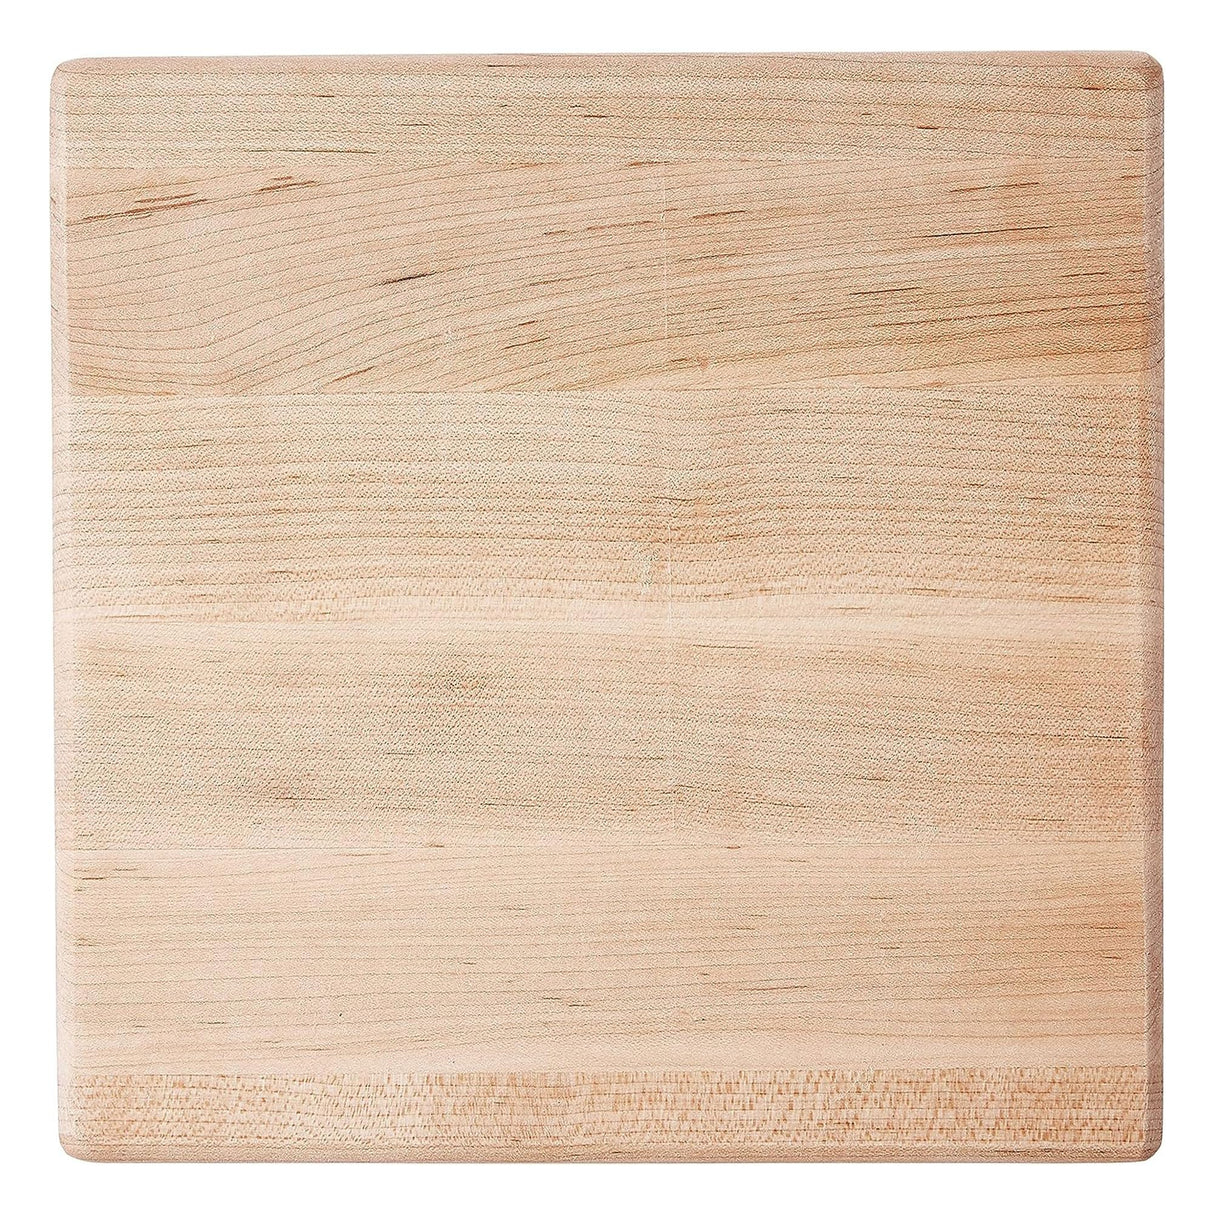 John Boos B9S Small Maple Cutting Board for Kitchen Prep 9 x Inches, 1.5 Inches Thick Edge Grain Square Charcuterie Block with Wooden Bun Feet 09X09X1.5 MPL-EDGE GR-MPL BUN FT